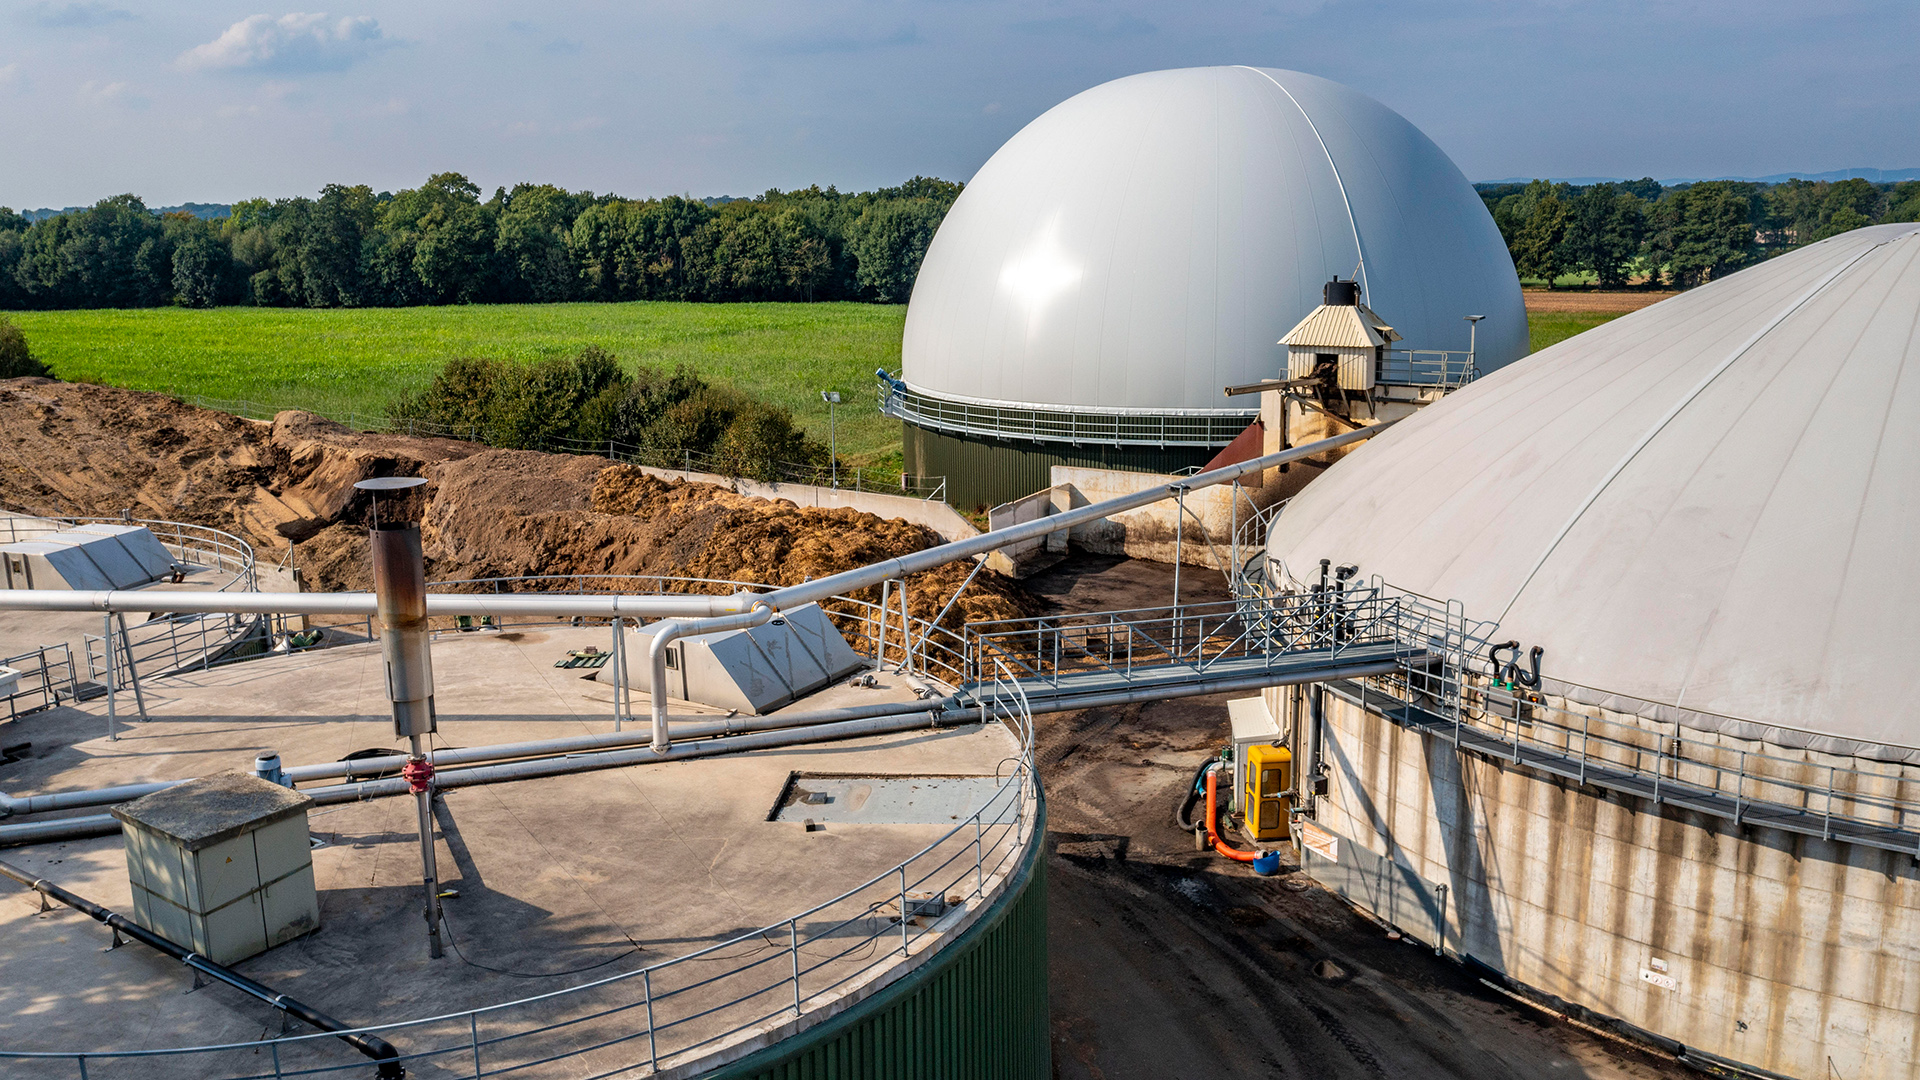 Biogaspeicher | picture alliance / Jochen Tack